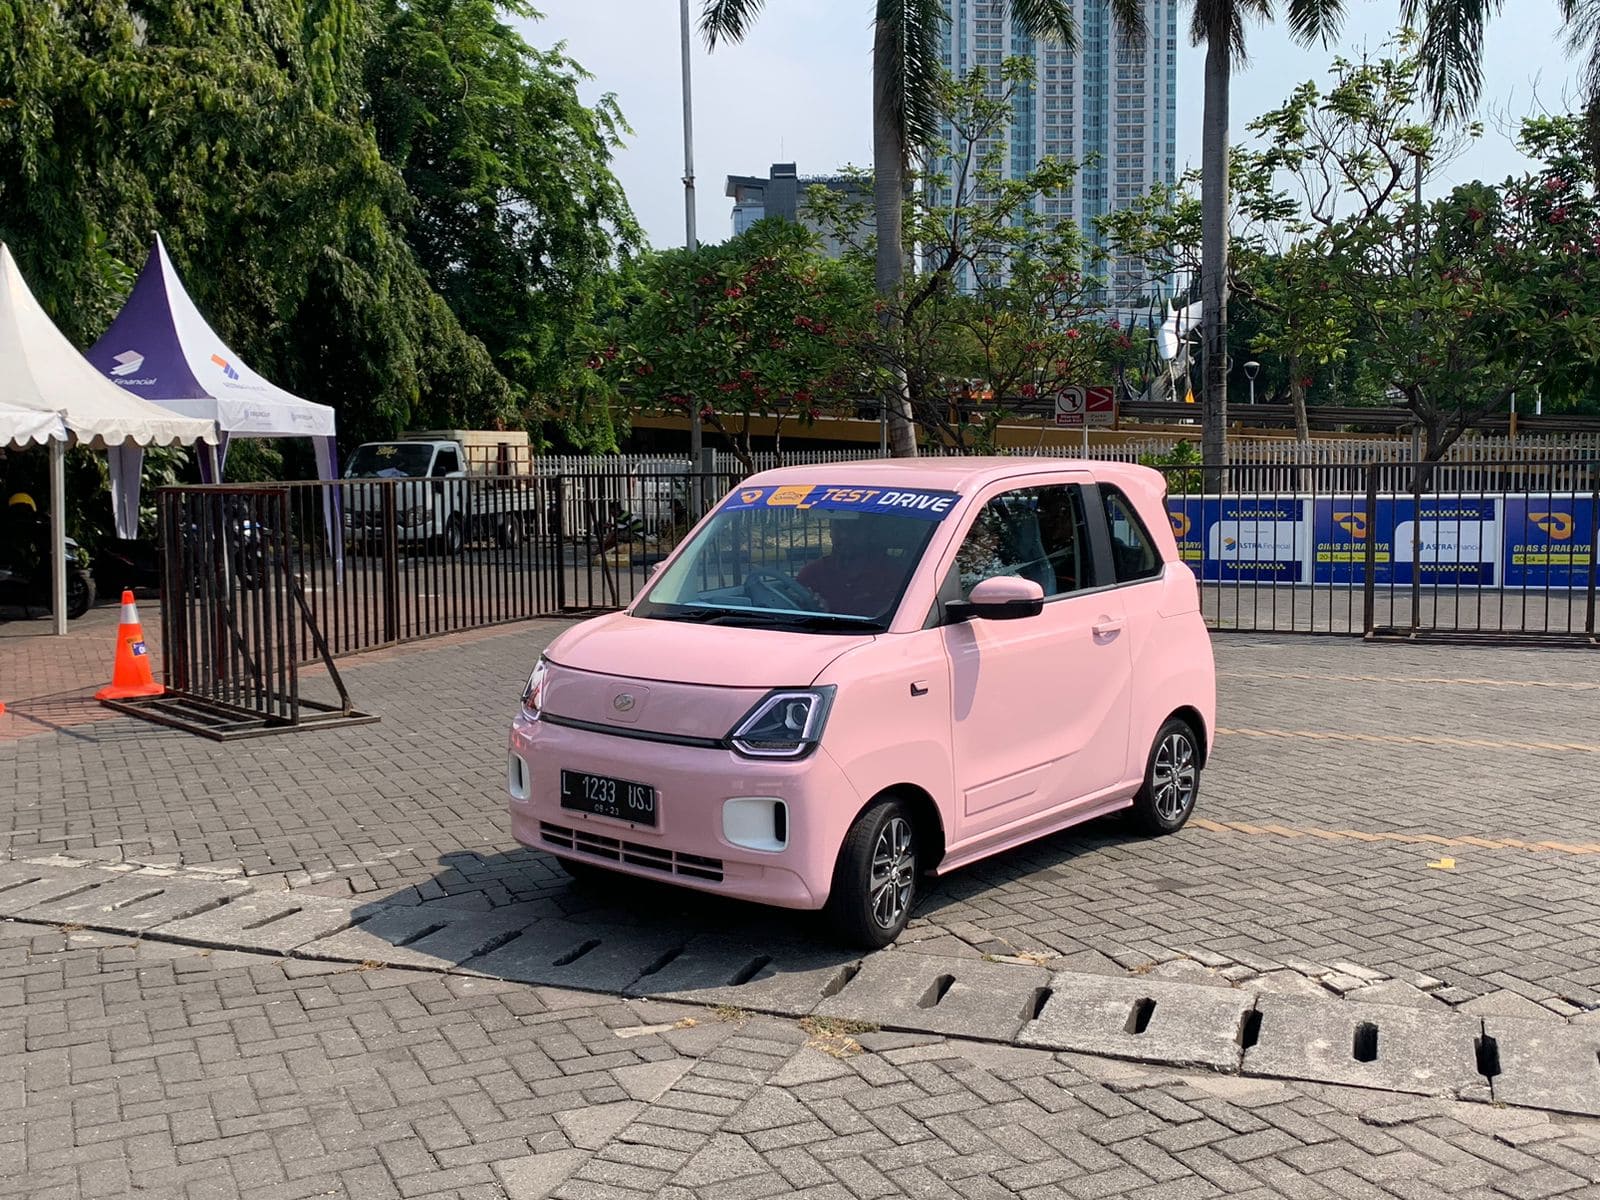 Surabaya kembali menjadi tuan rumah rangkaian pameran otomotif GIIAS The Series. Pameran ini akan berlangsung selama 5 hari pada 20 – 24 September di Grand City Convex.